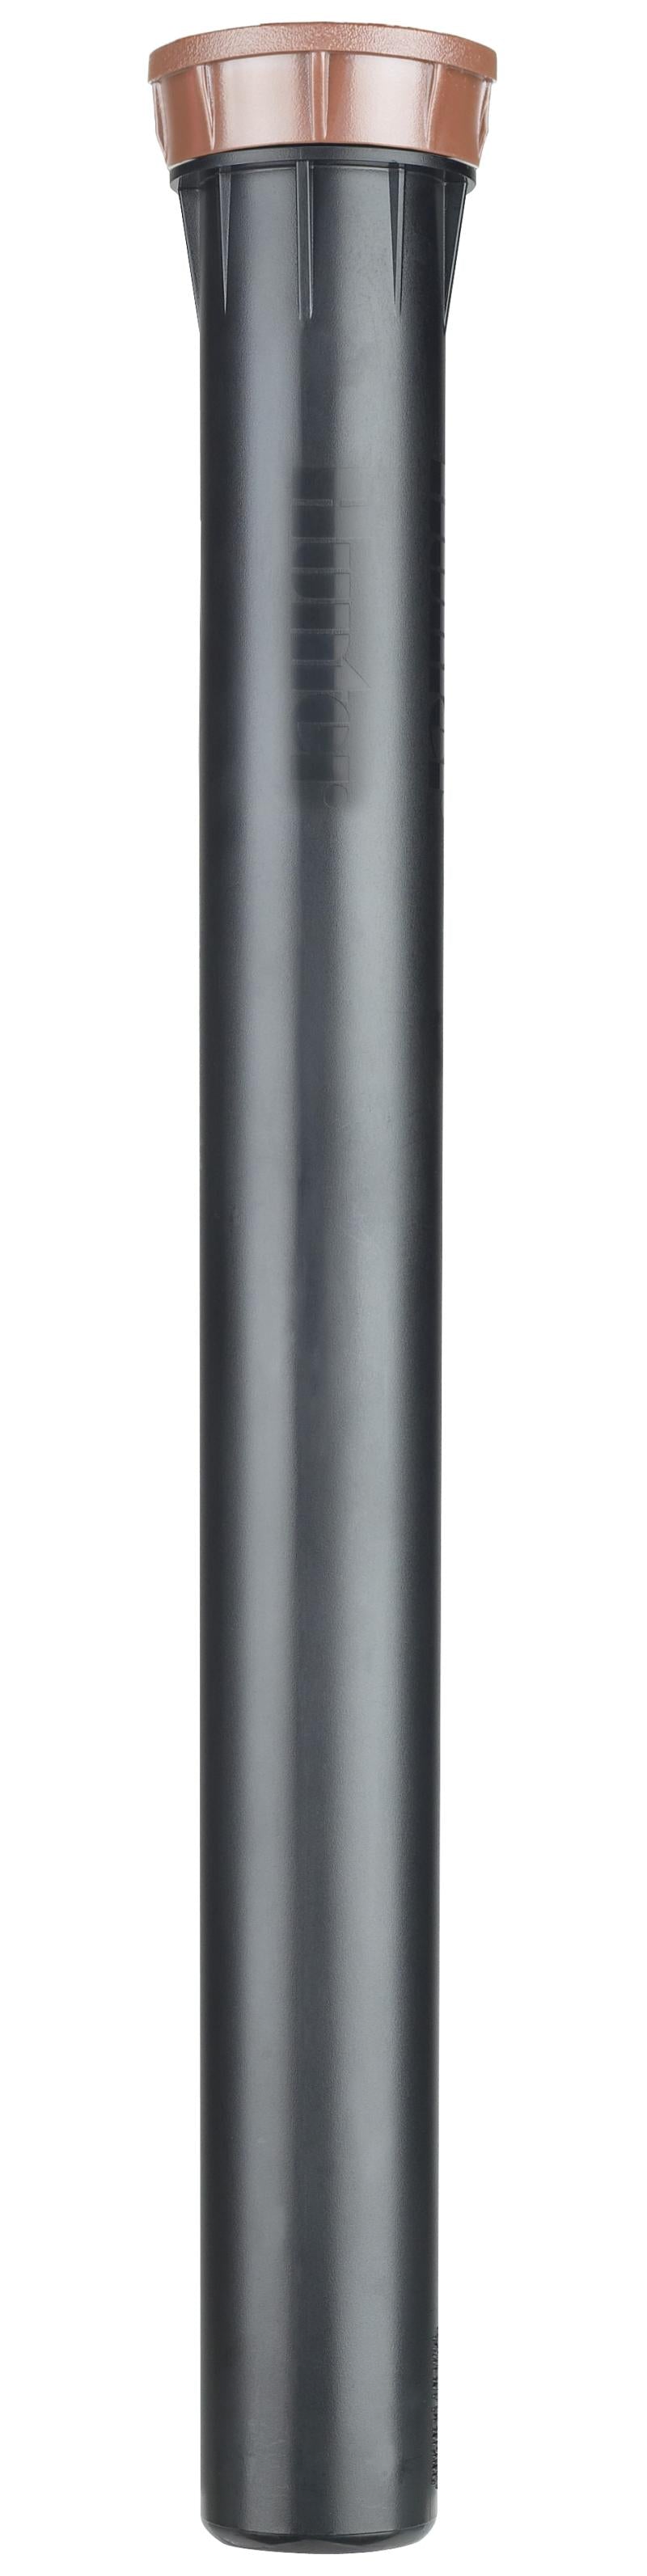 Hunter Industries PROS12PRS30CVF Spray Sprinkler Body, 30 cm Pop-Up with 2.1 Bar Pressure Regulator & Check Valve